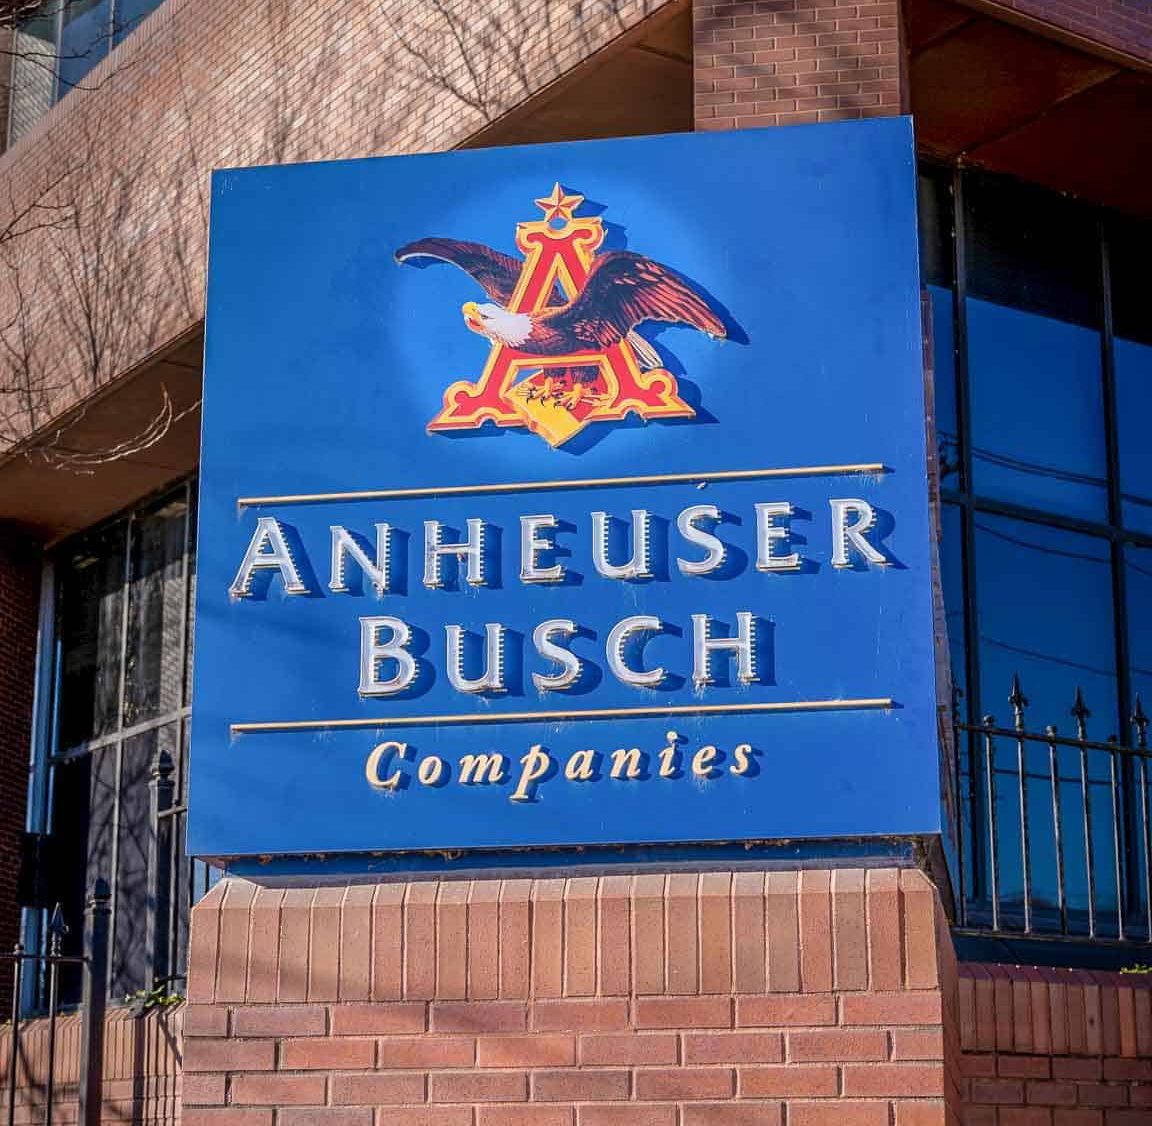 Anheuser Busch's Headquarters exterior sign